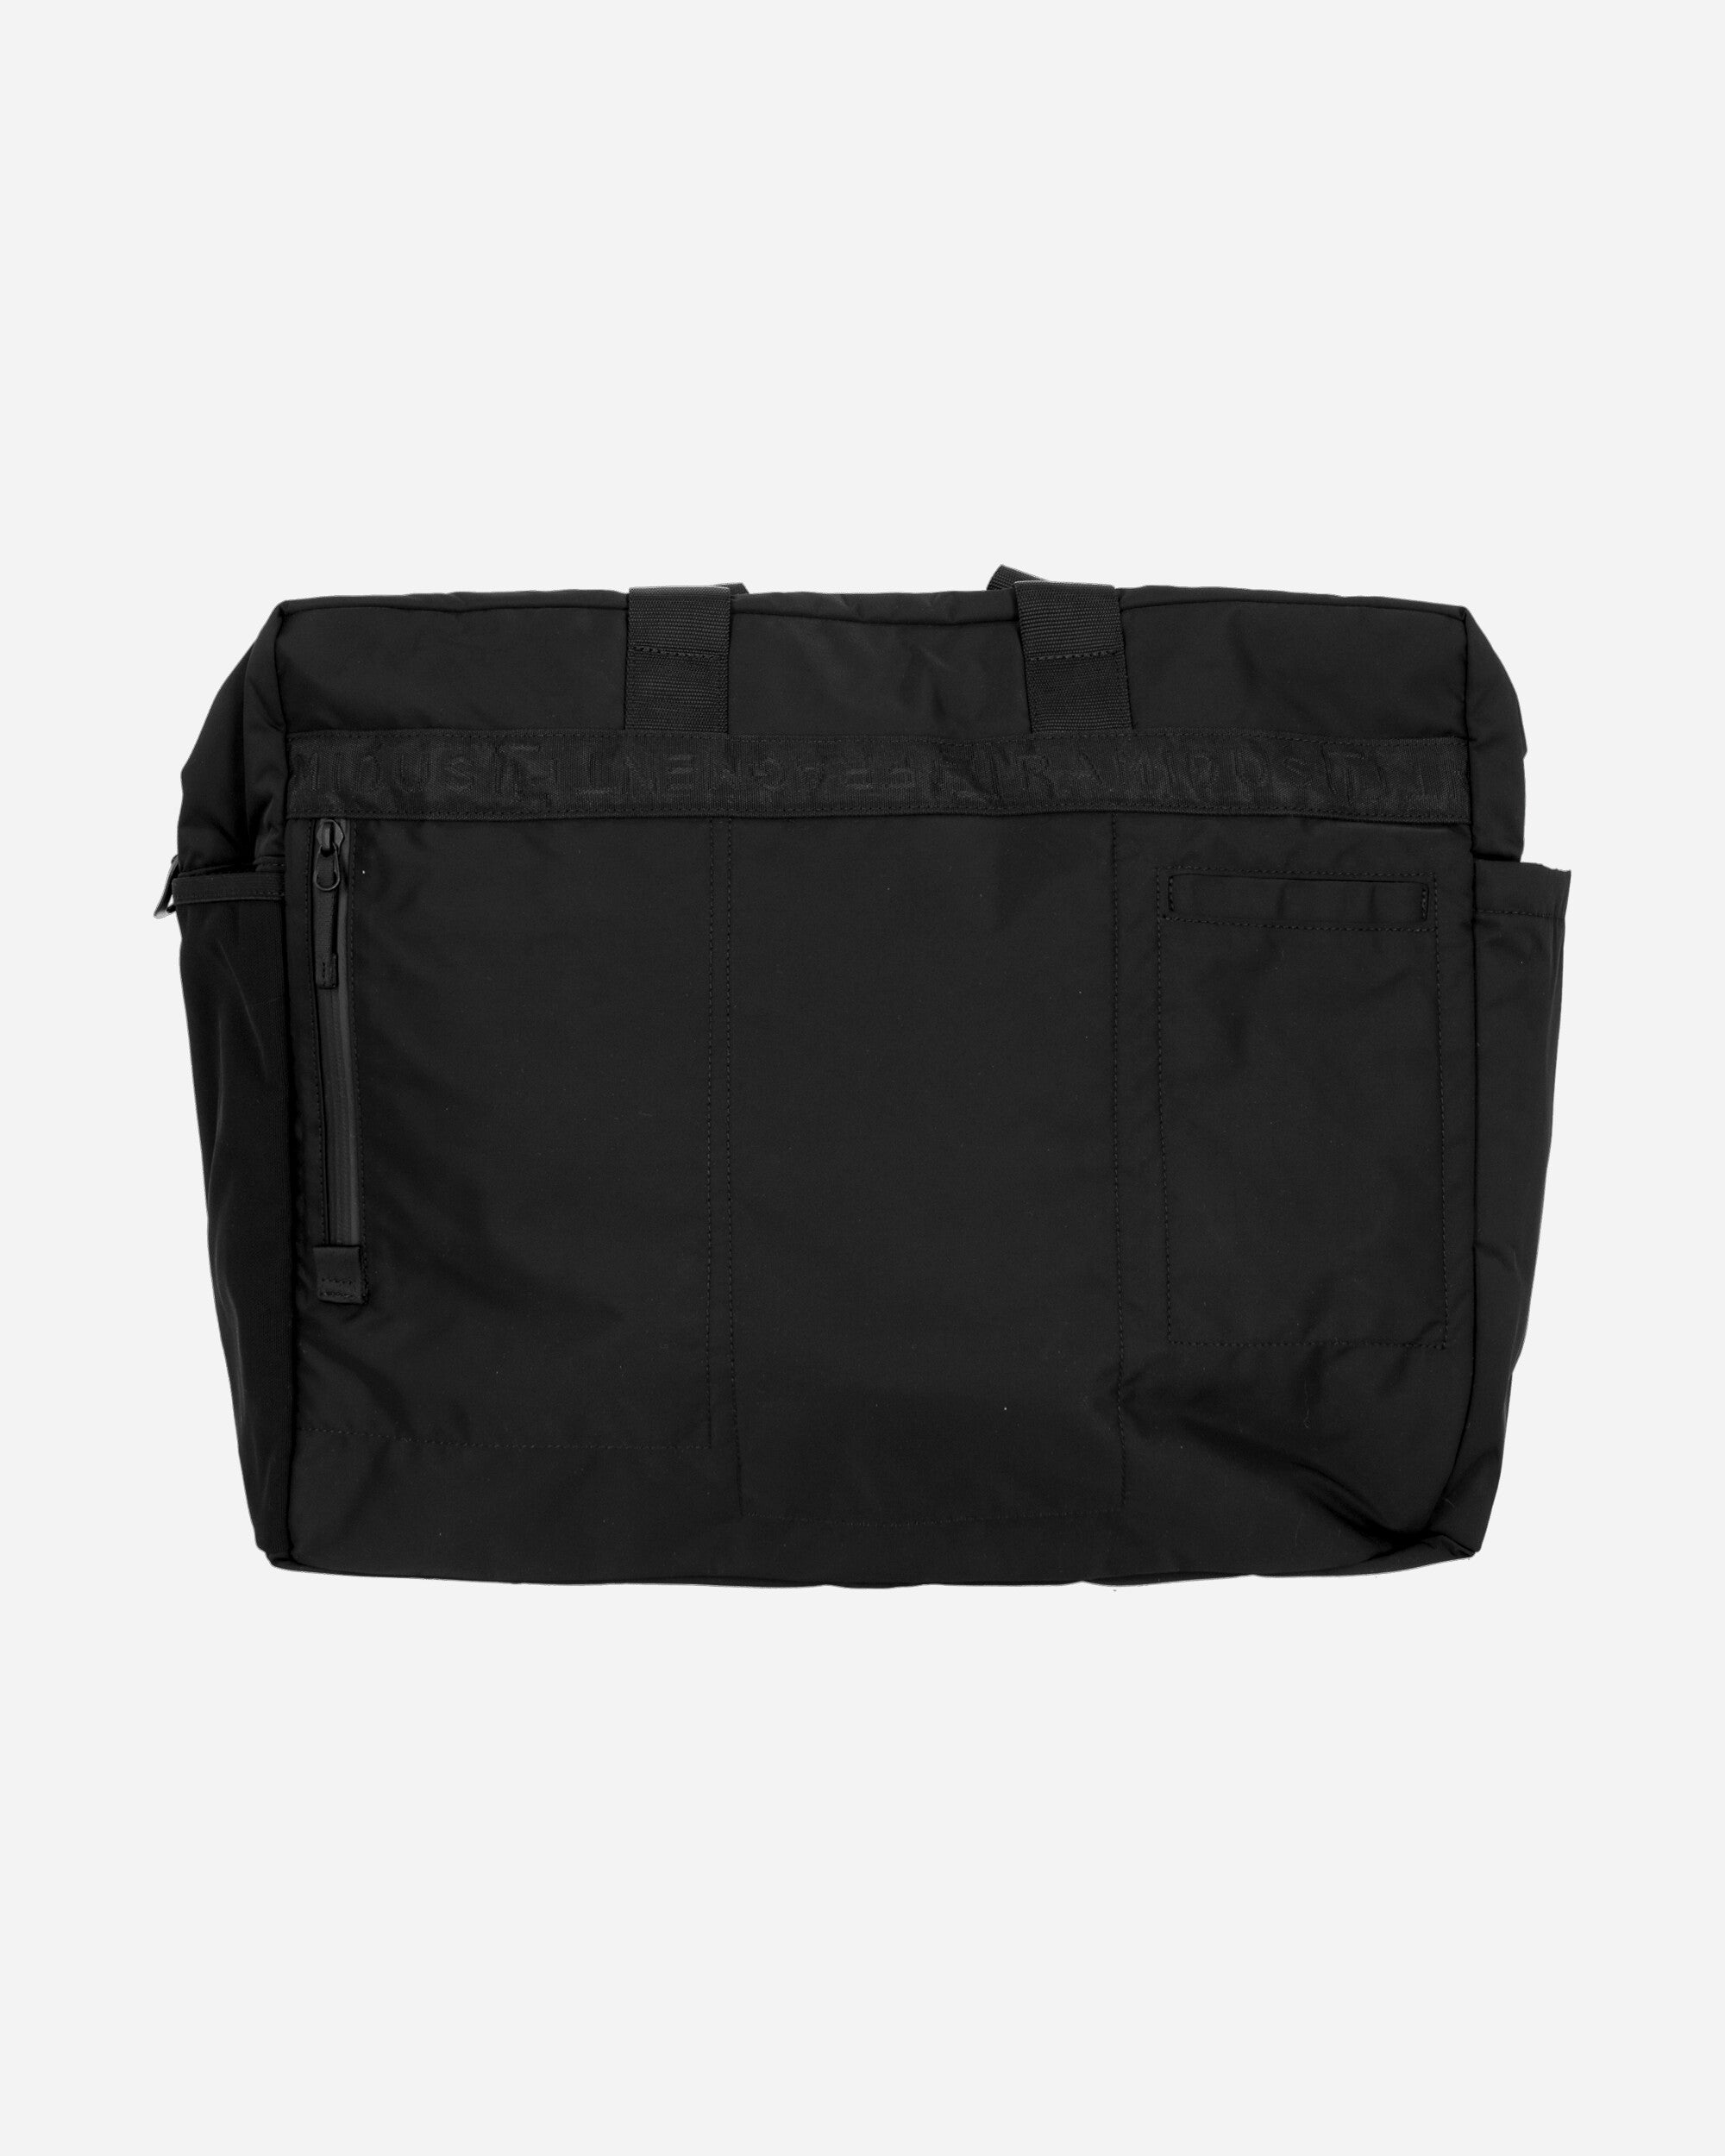 Ramidus Duffle Bag Black Bags and Backpacks Travel Bags B017028 001